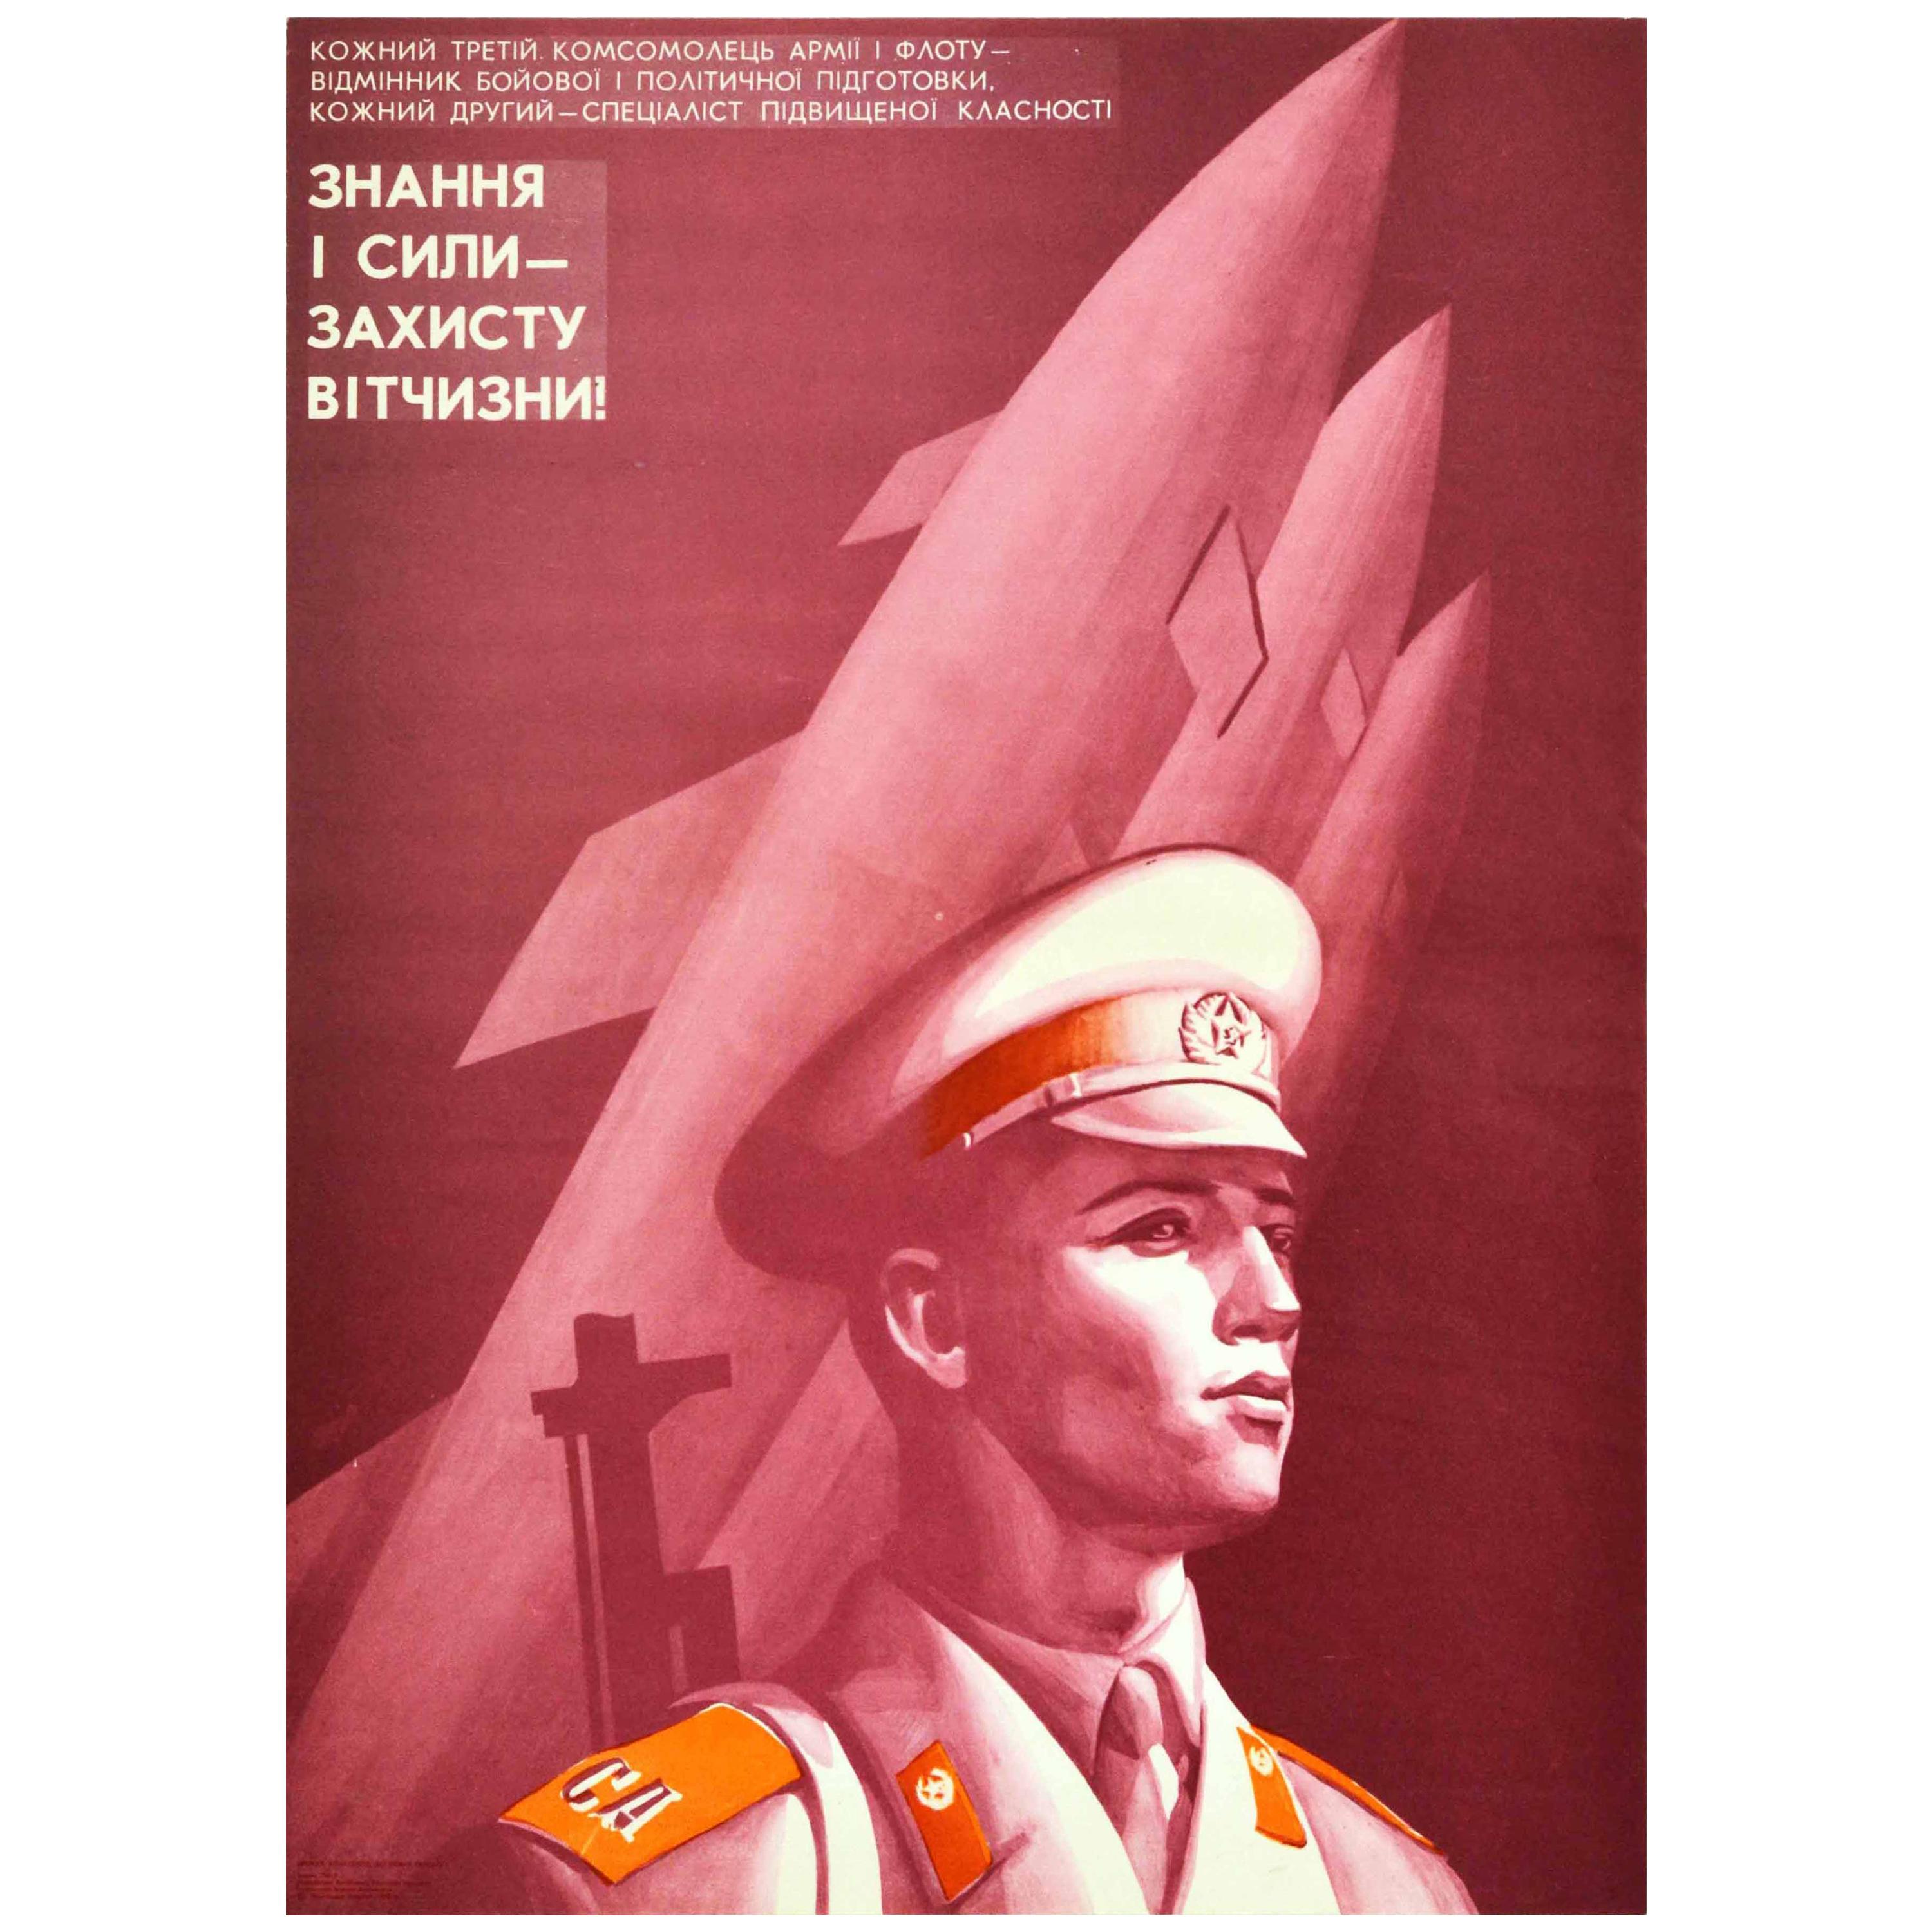 Original Vintage Poster Red Army Navy Soviet Military Knowledge Strength Defend